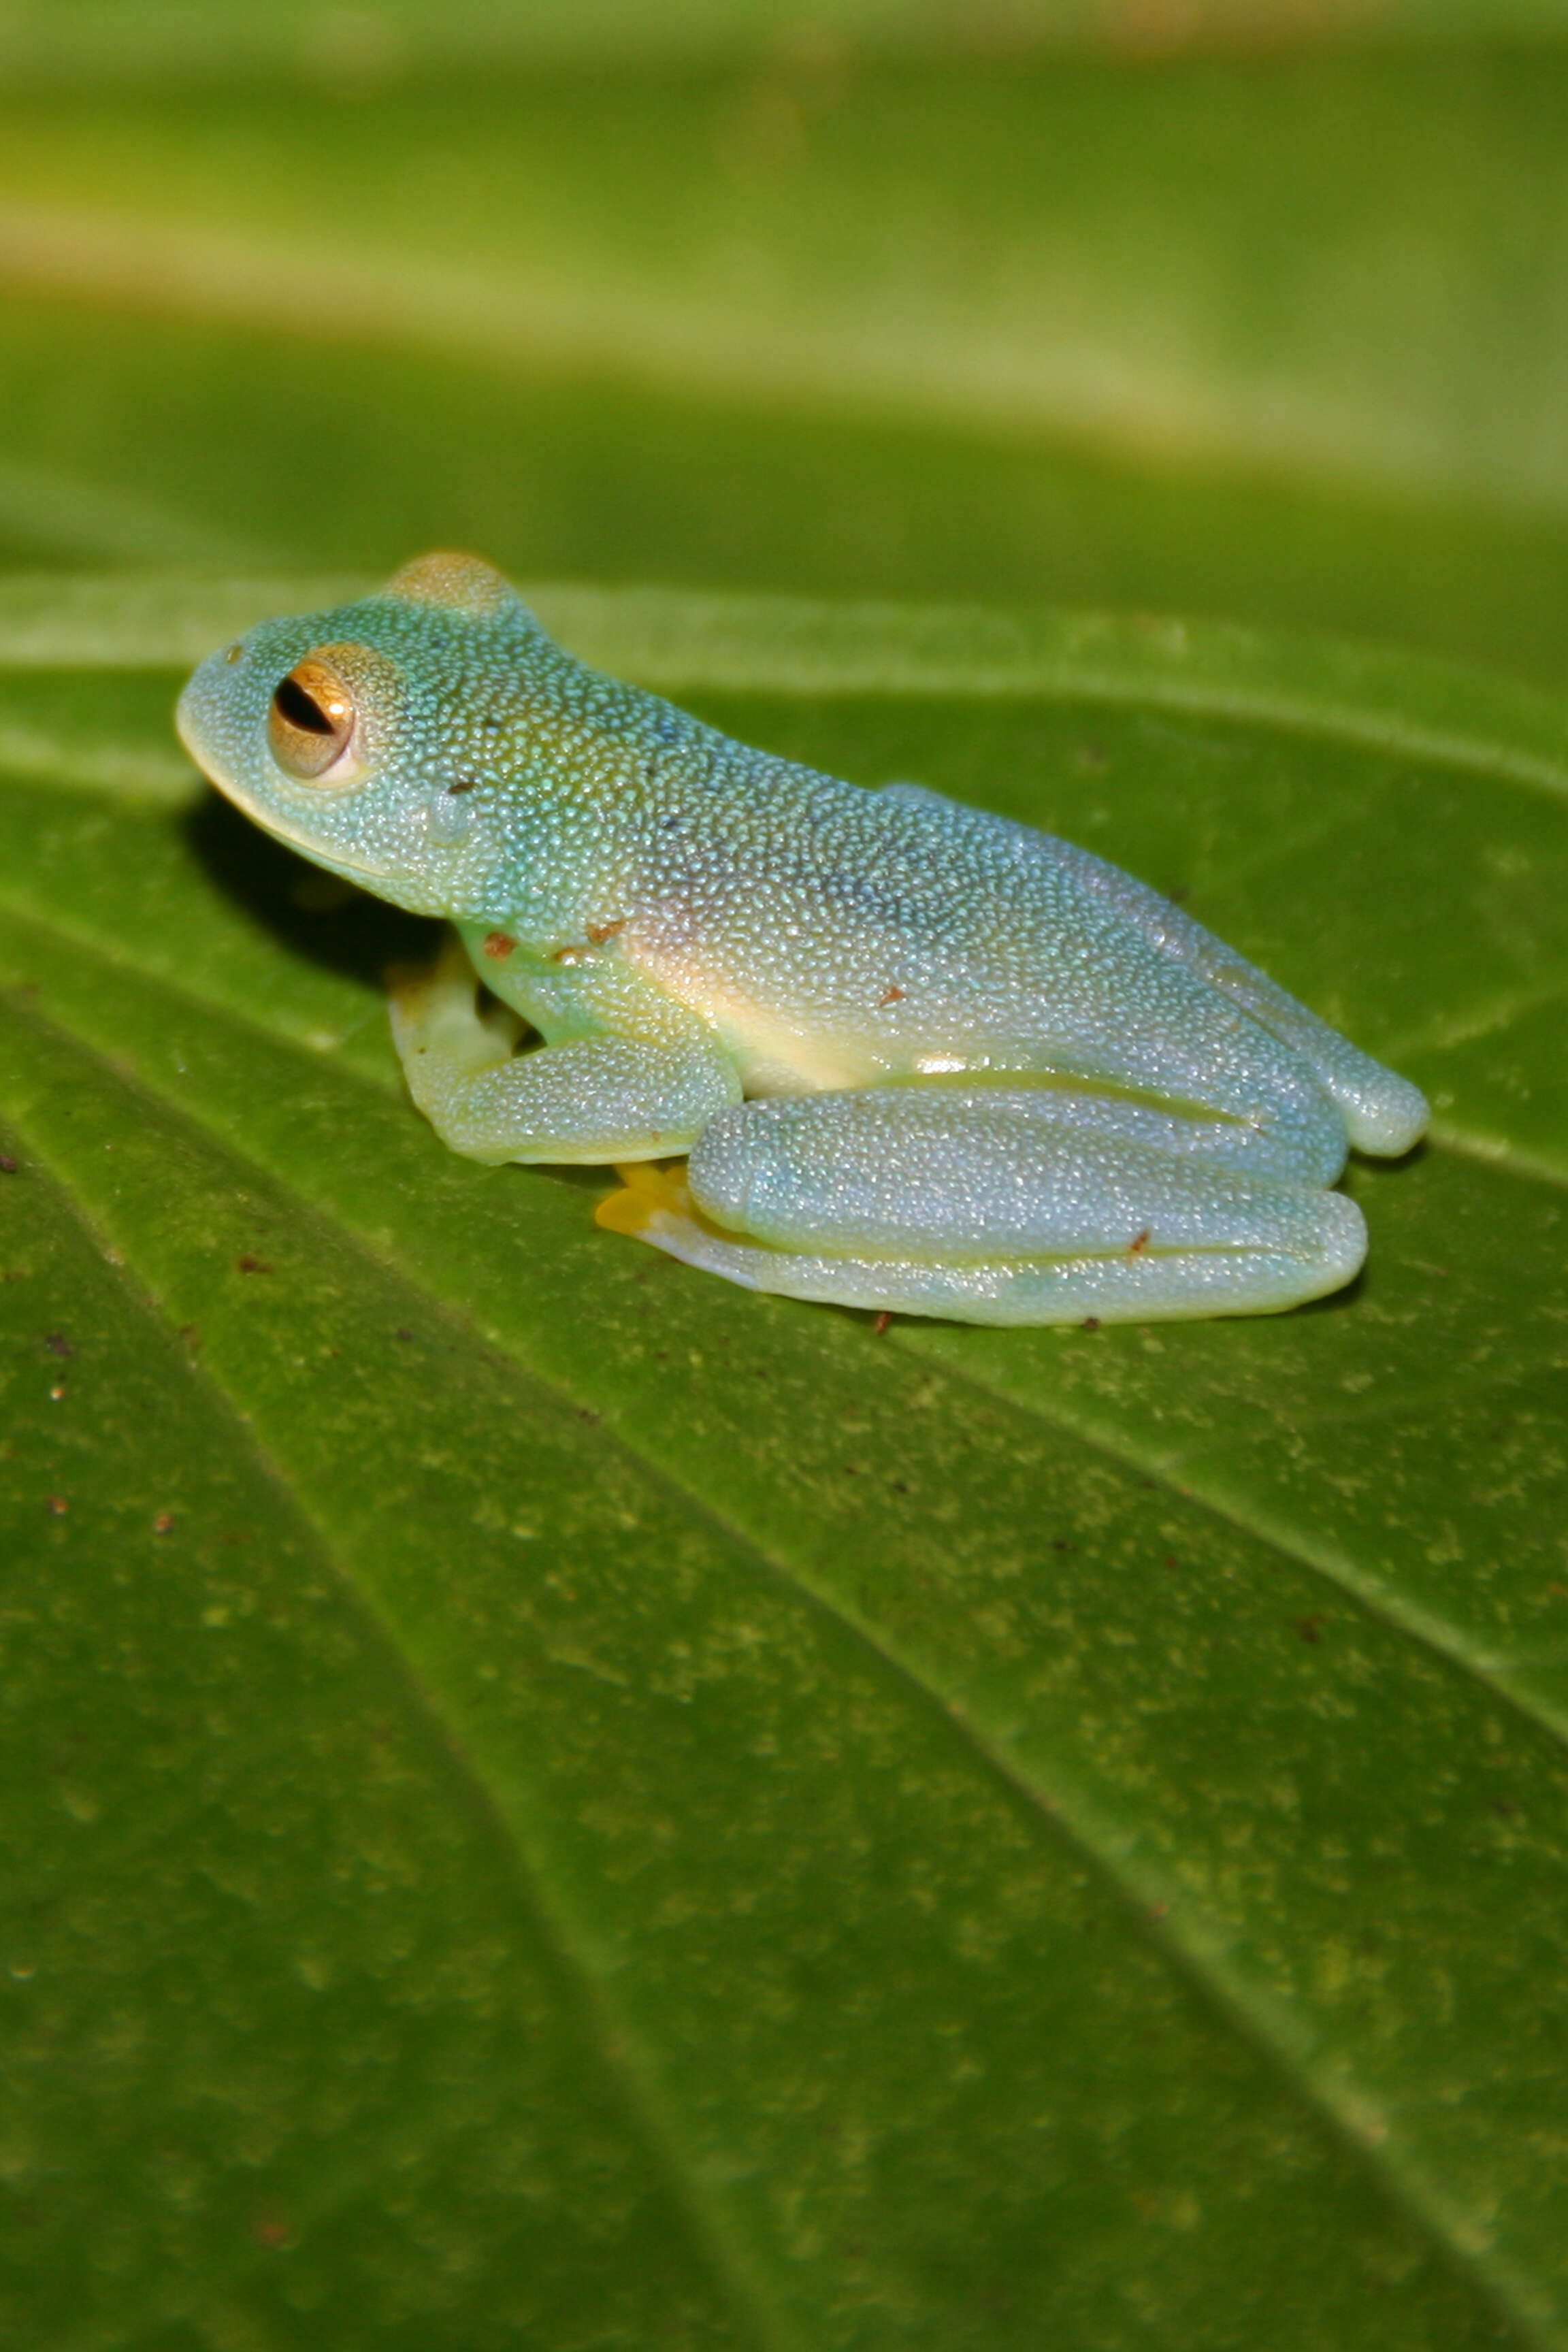 Image of Grainy Cochran Frog